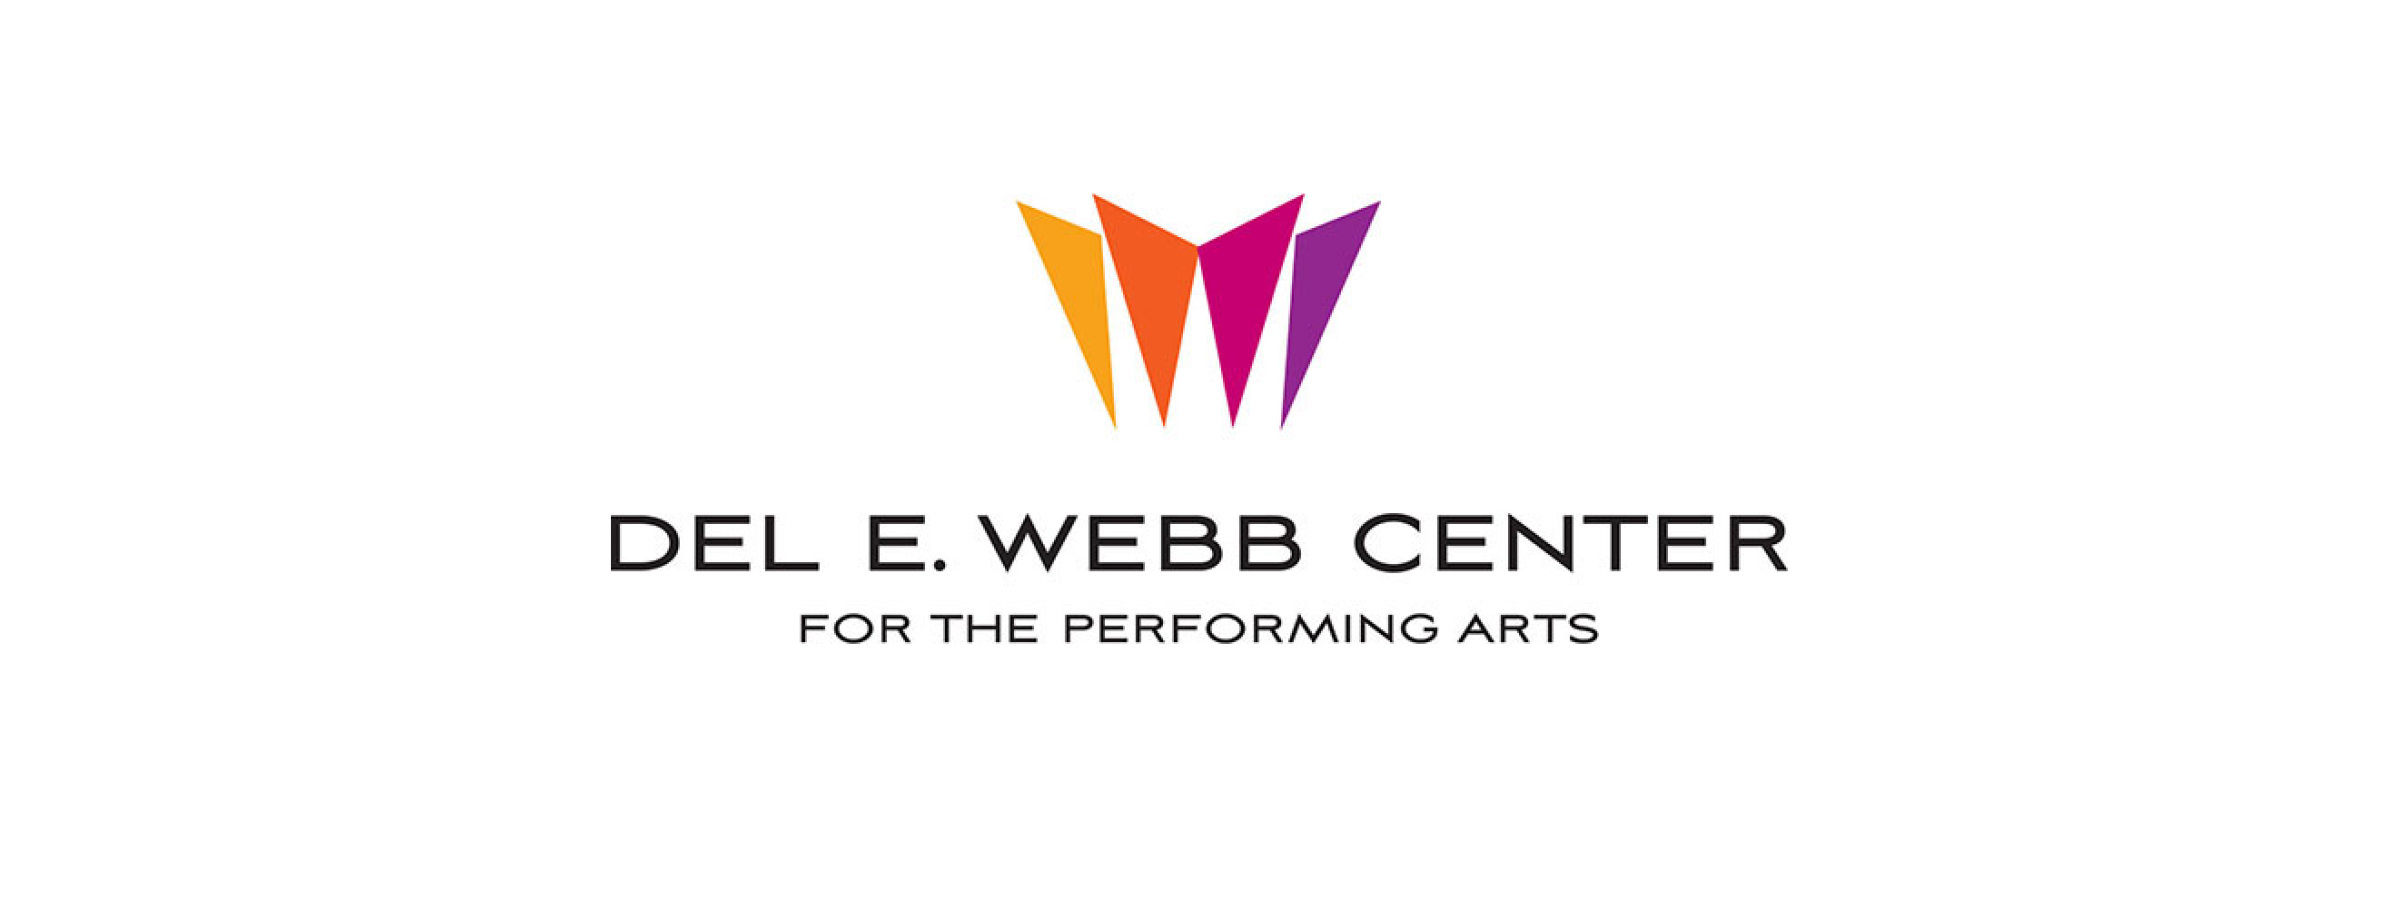 Webb Center logo.jpg